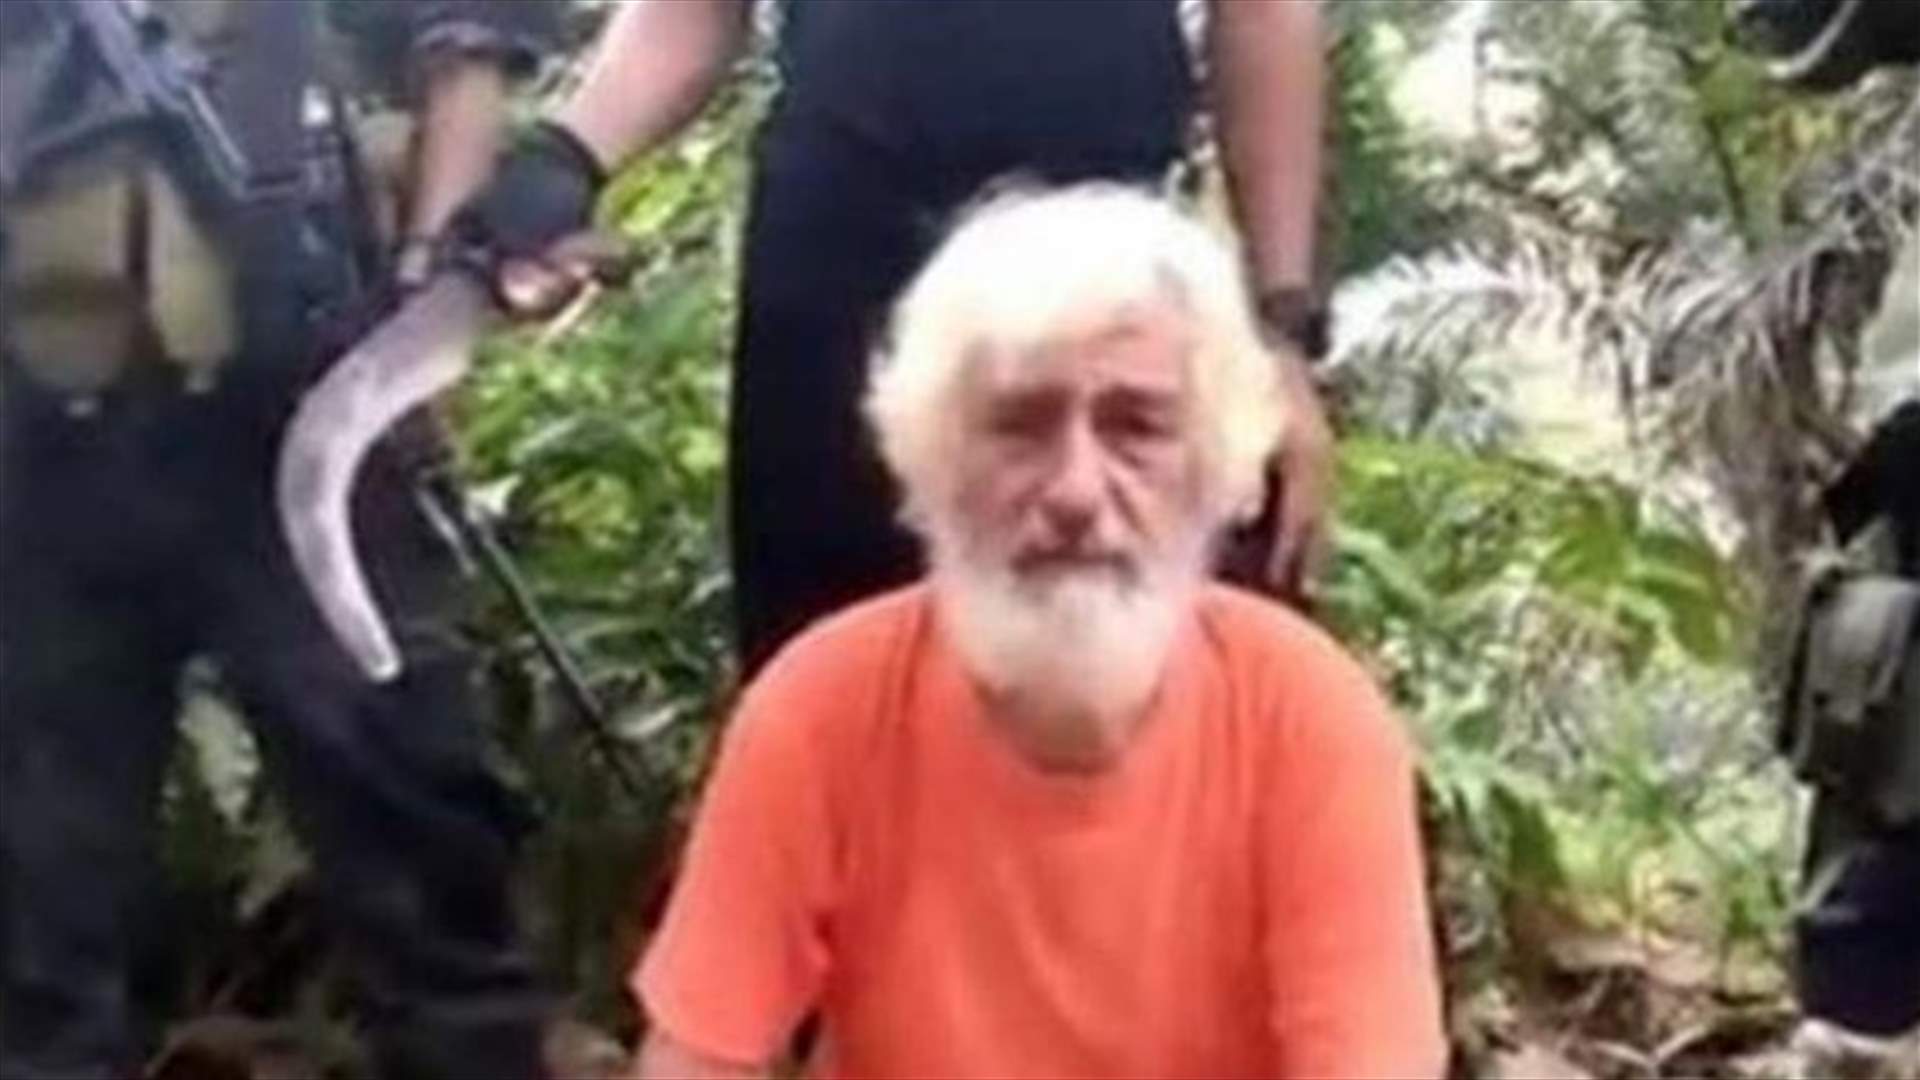 Philippines-based militant group Abu Sayyaf beheads German hostage-SITE